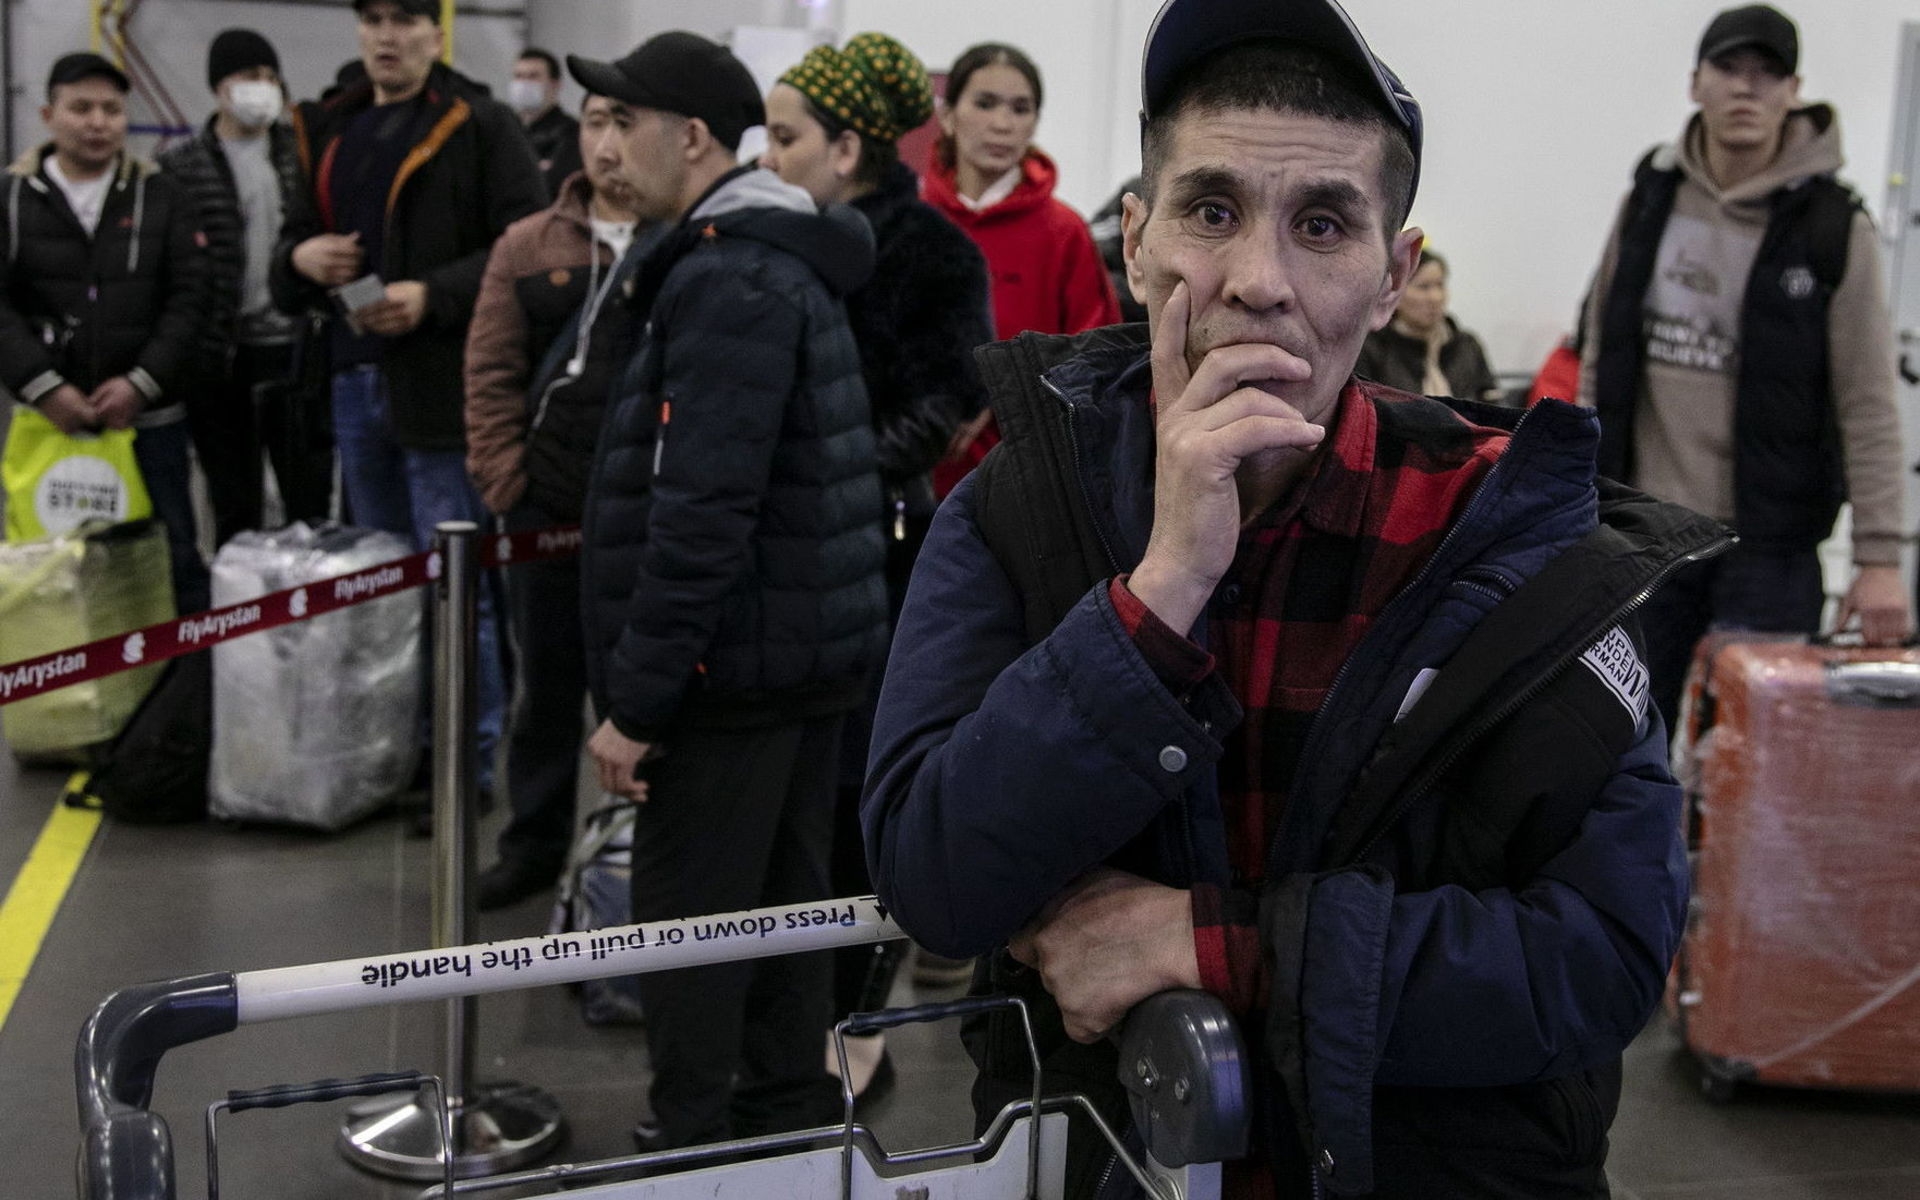 Новости дня мигрантов. Мигранты в аэропорту. Мигранты Таджикистана. Узбеки в аэропорту. Трудовые мигранты.